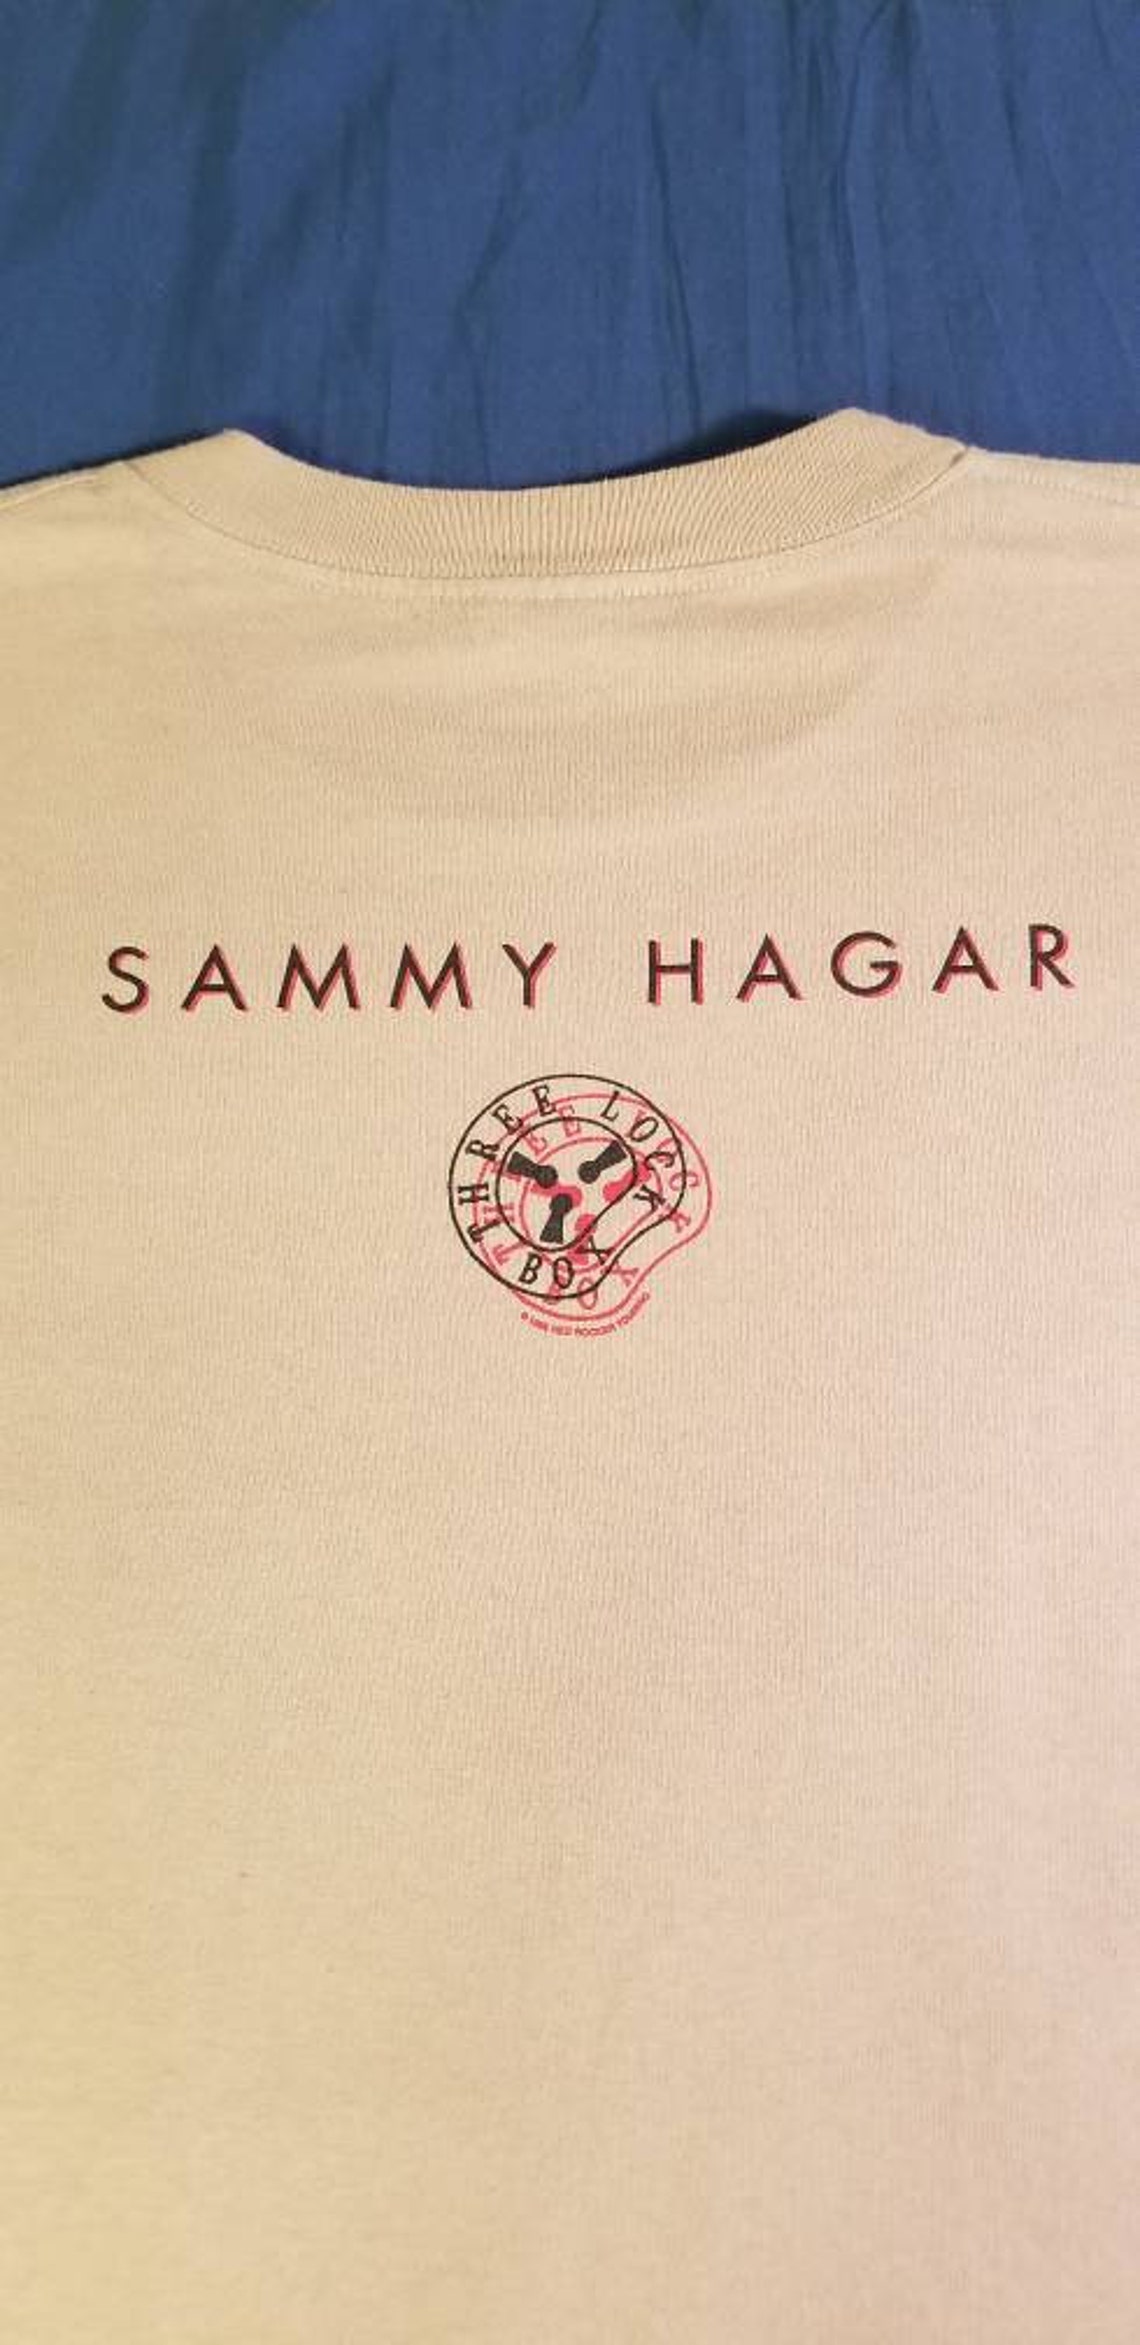 Sammy Hagar Three Lock Box Album Cover. - Etsy